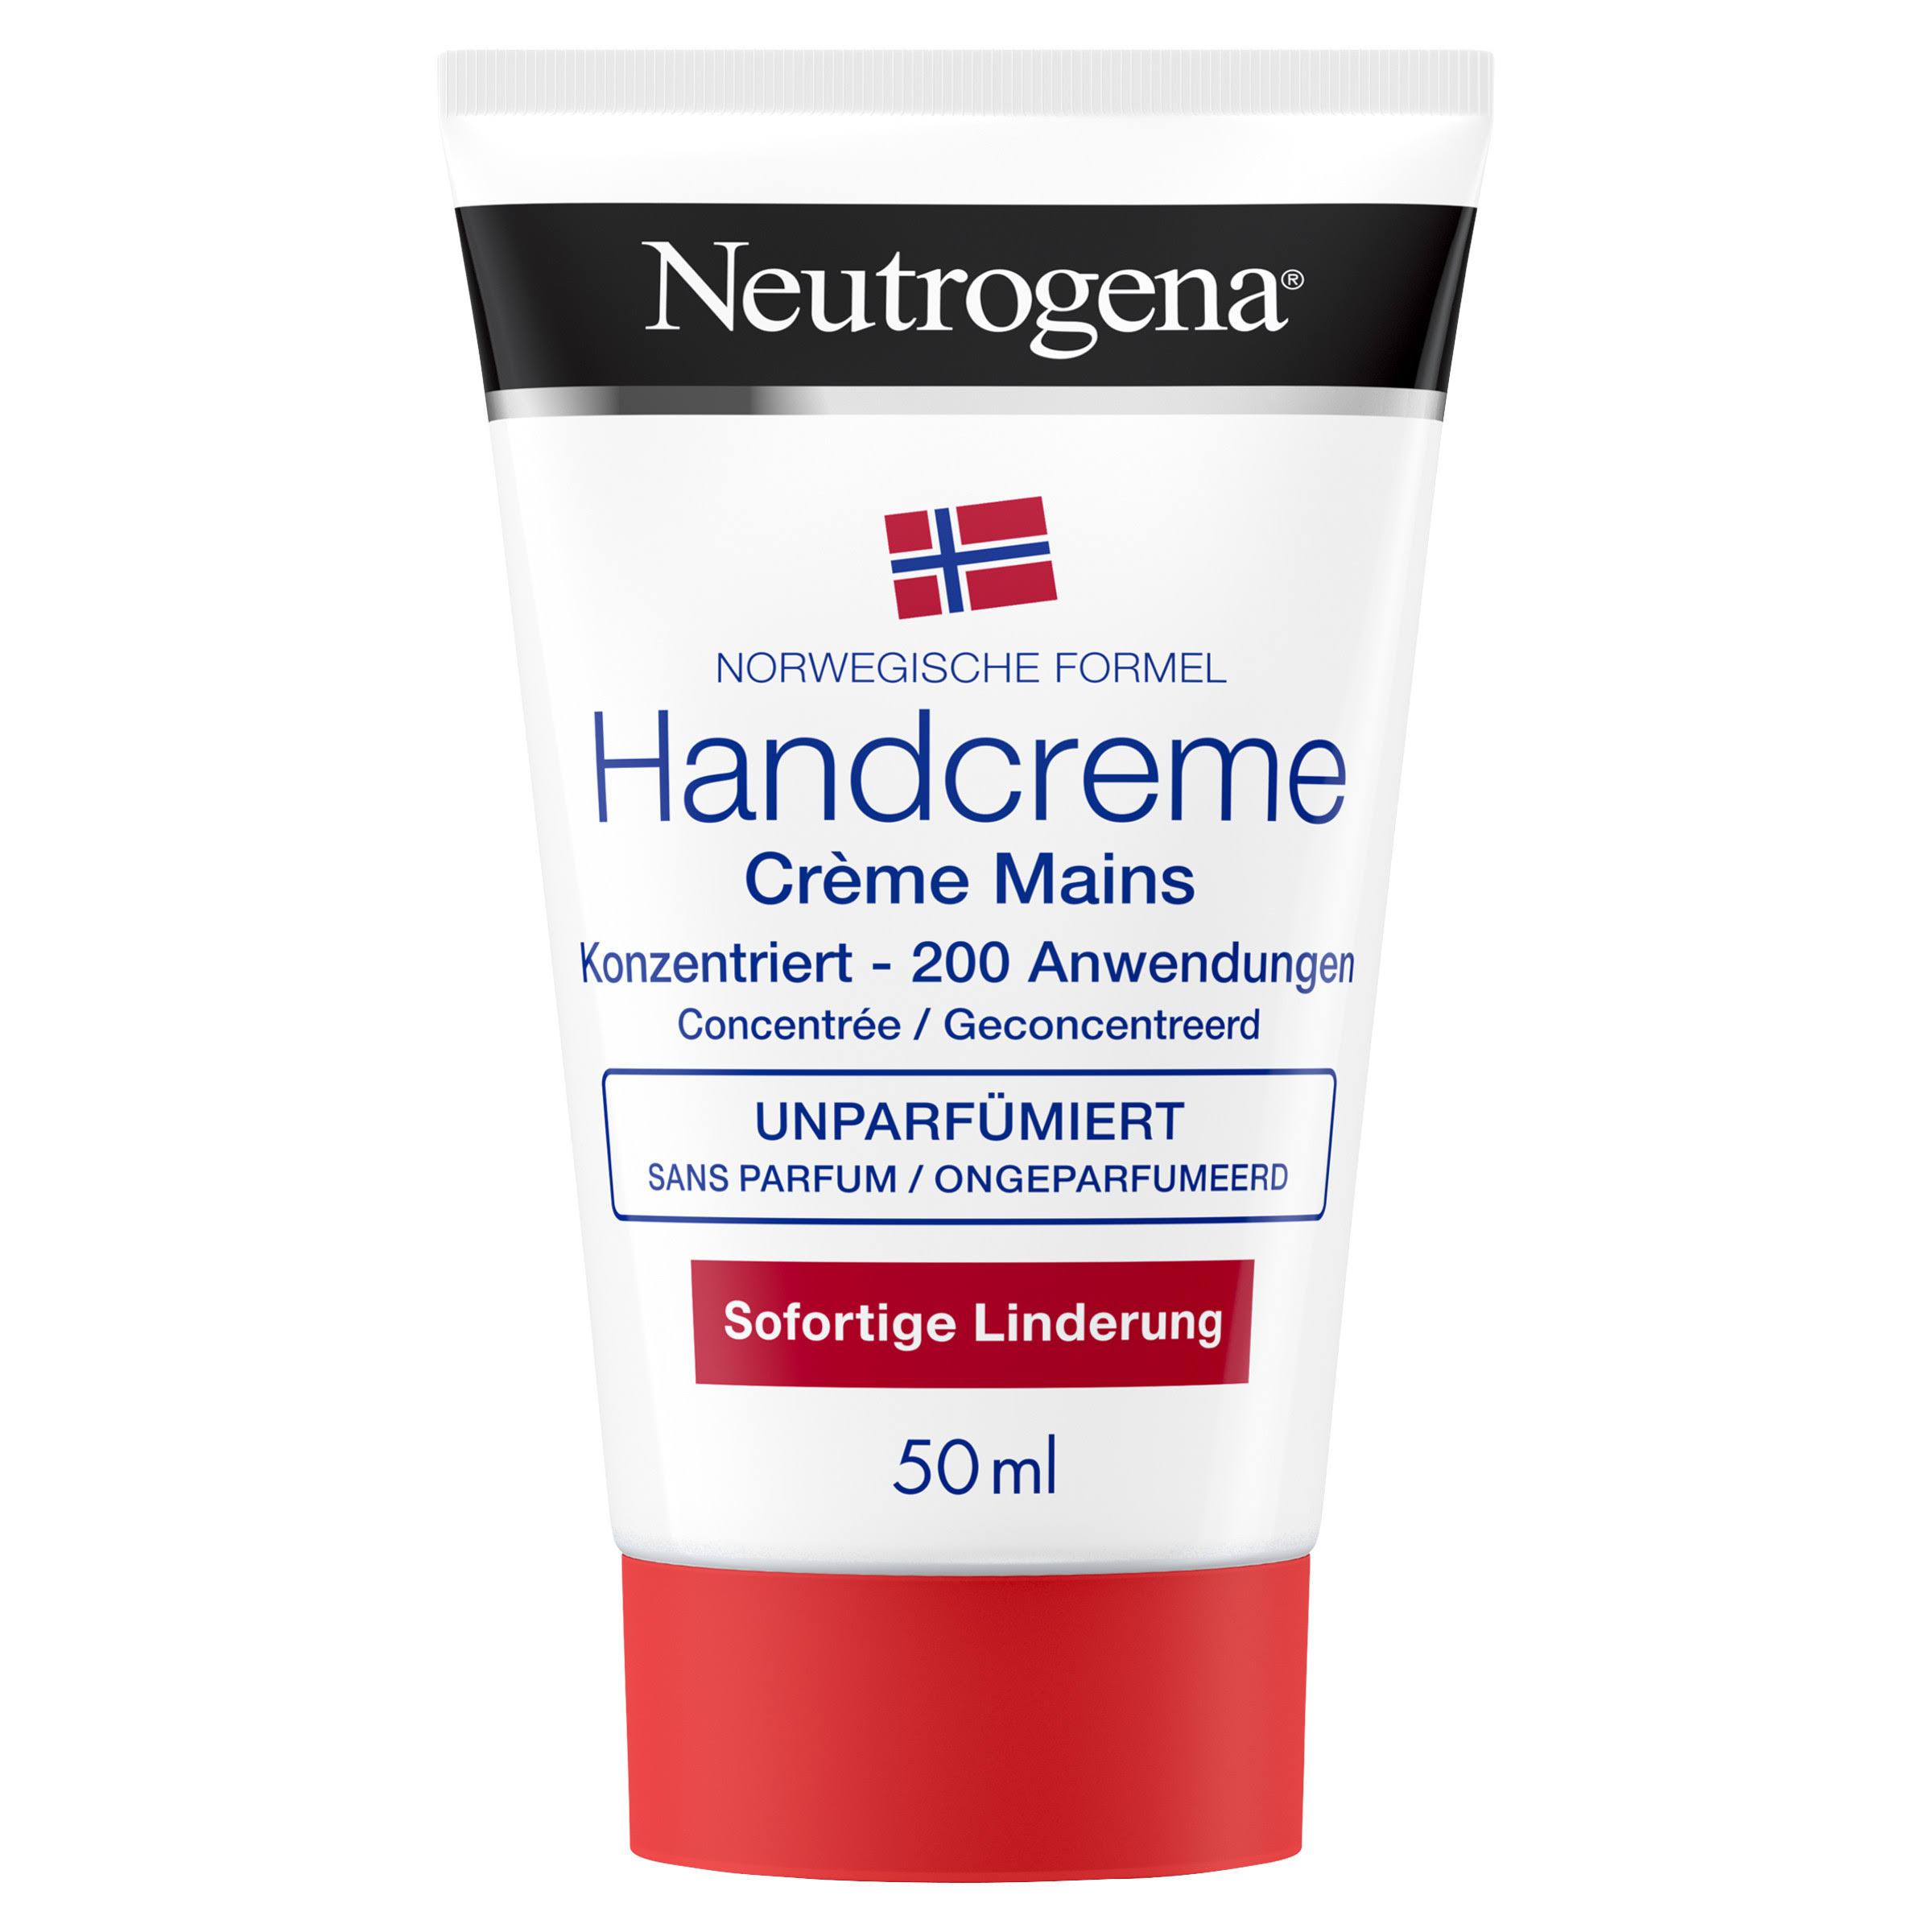 Neutrogena Norwegian Formula Concentrated Unscented Hand Cream - 50ml